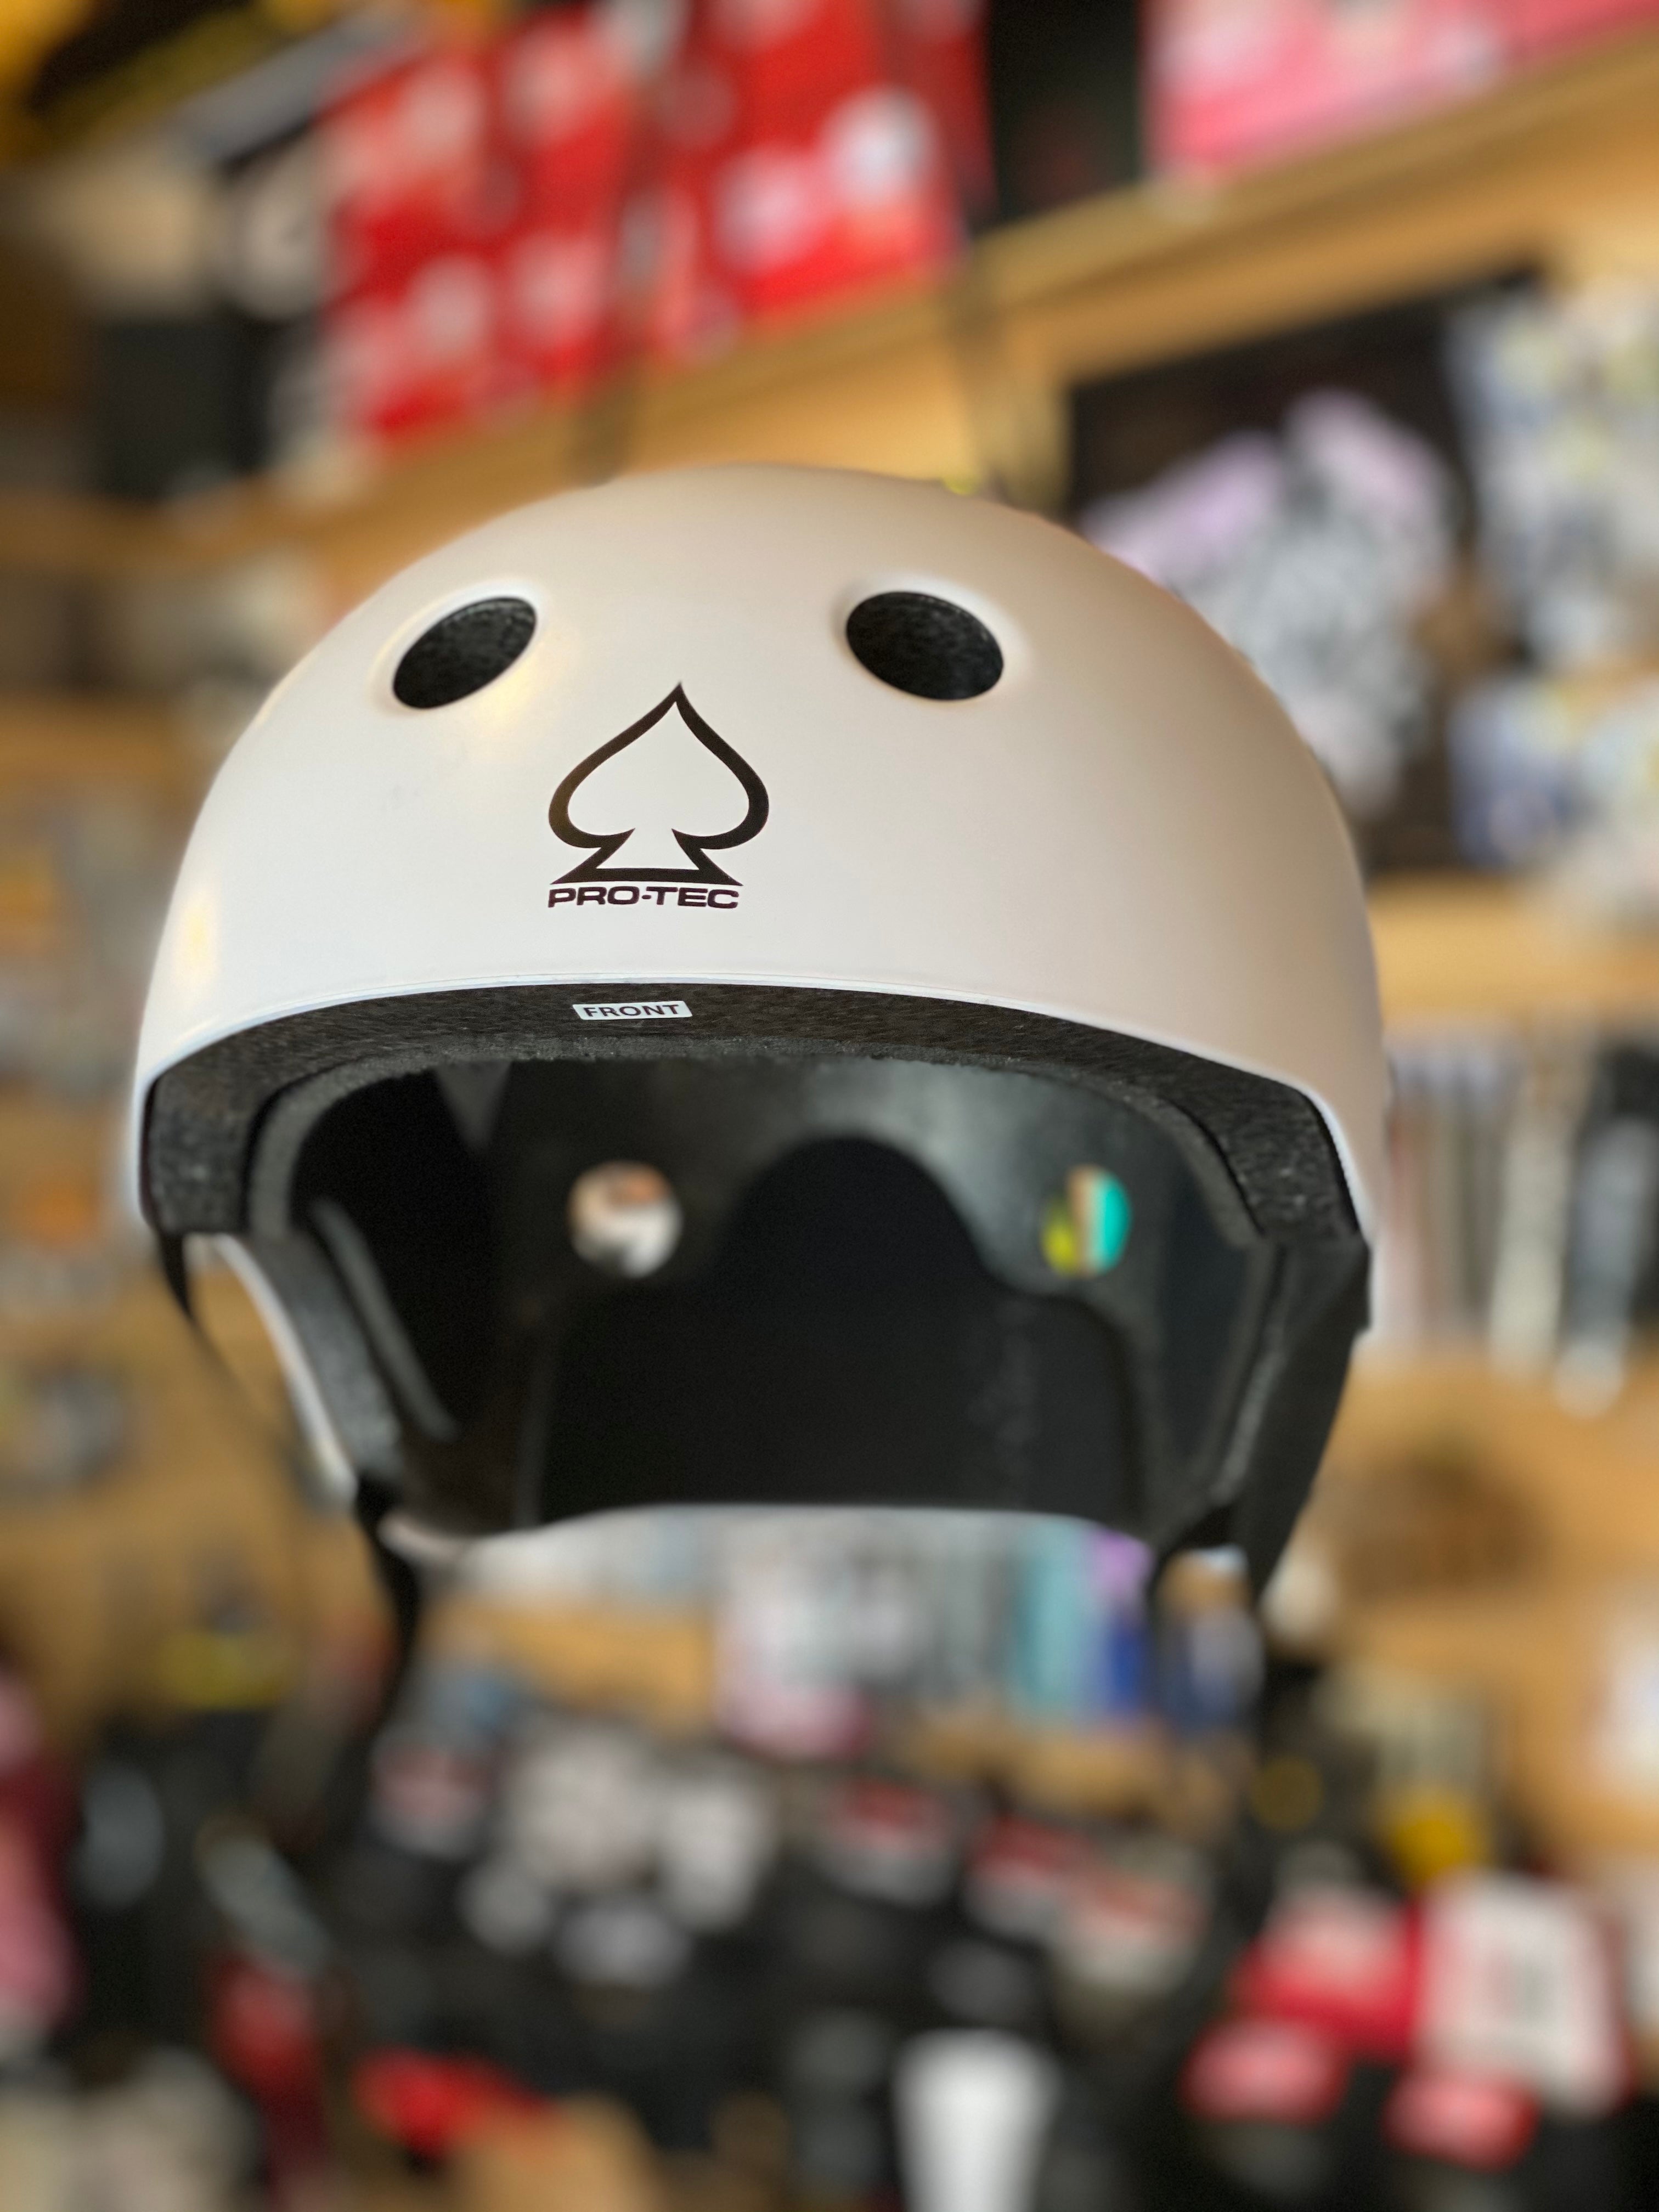 ProTec Prime helmet